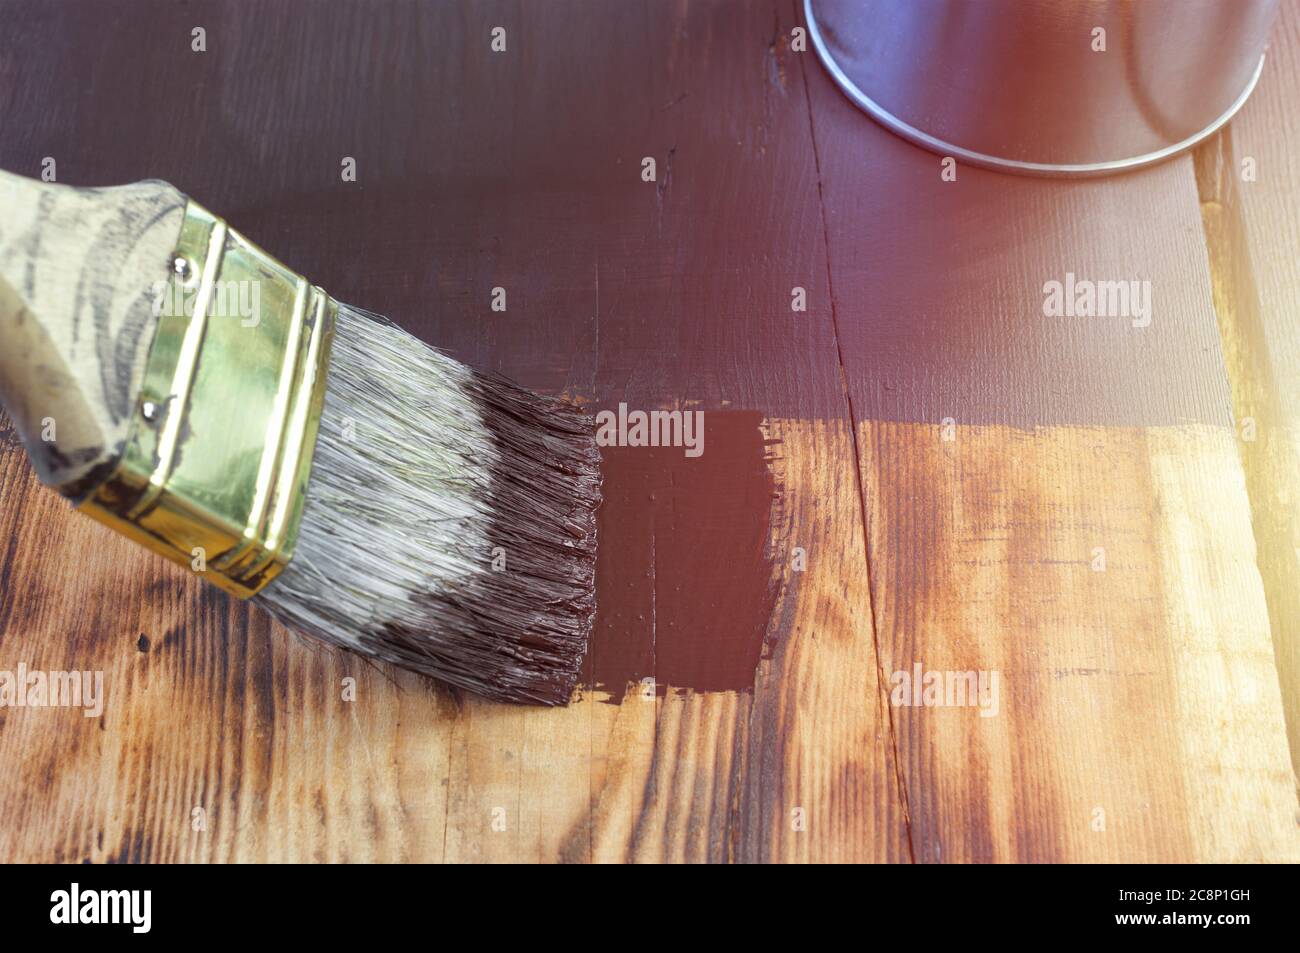 Paint brush on wooden surface Stock Photo